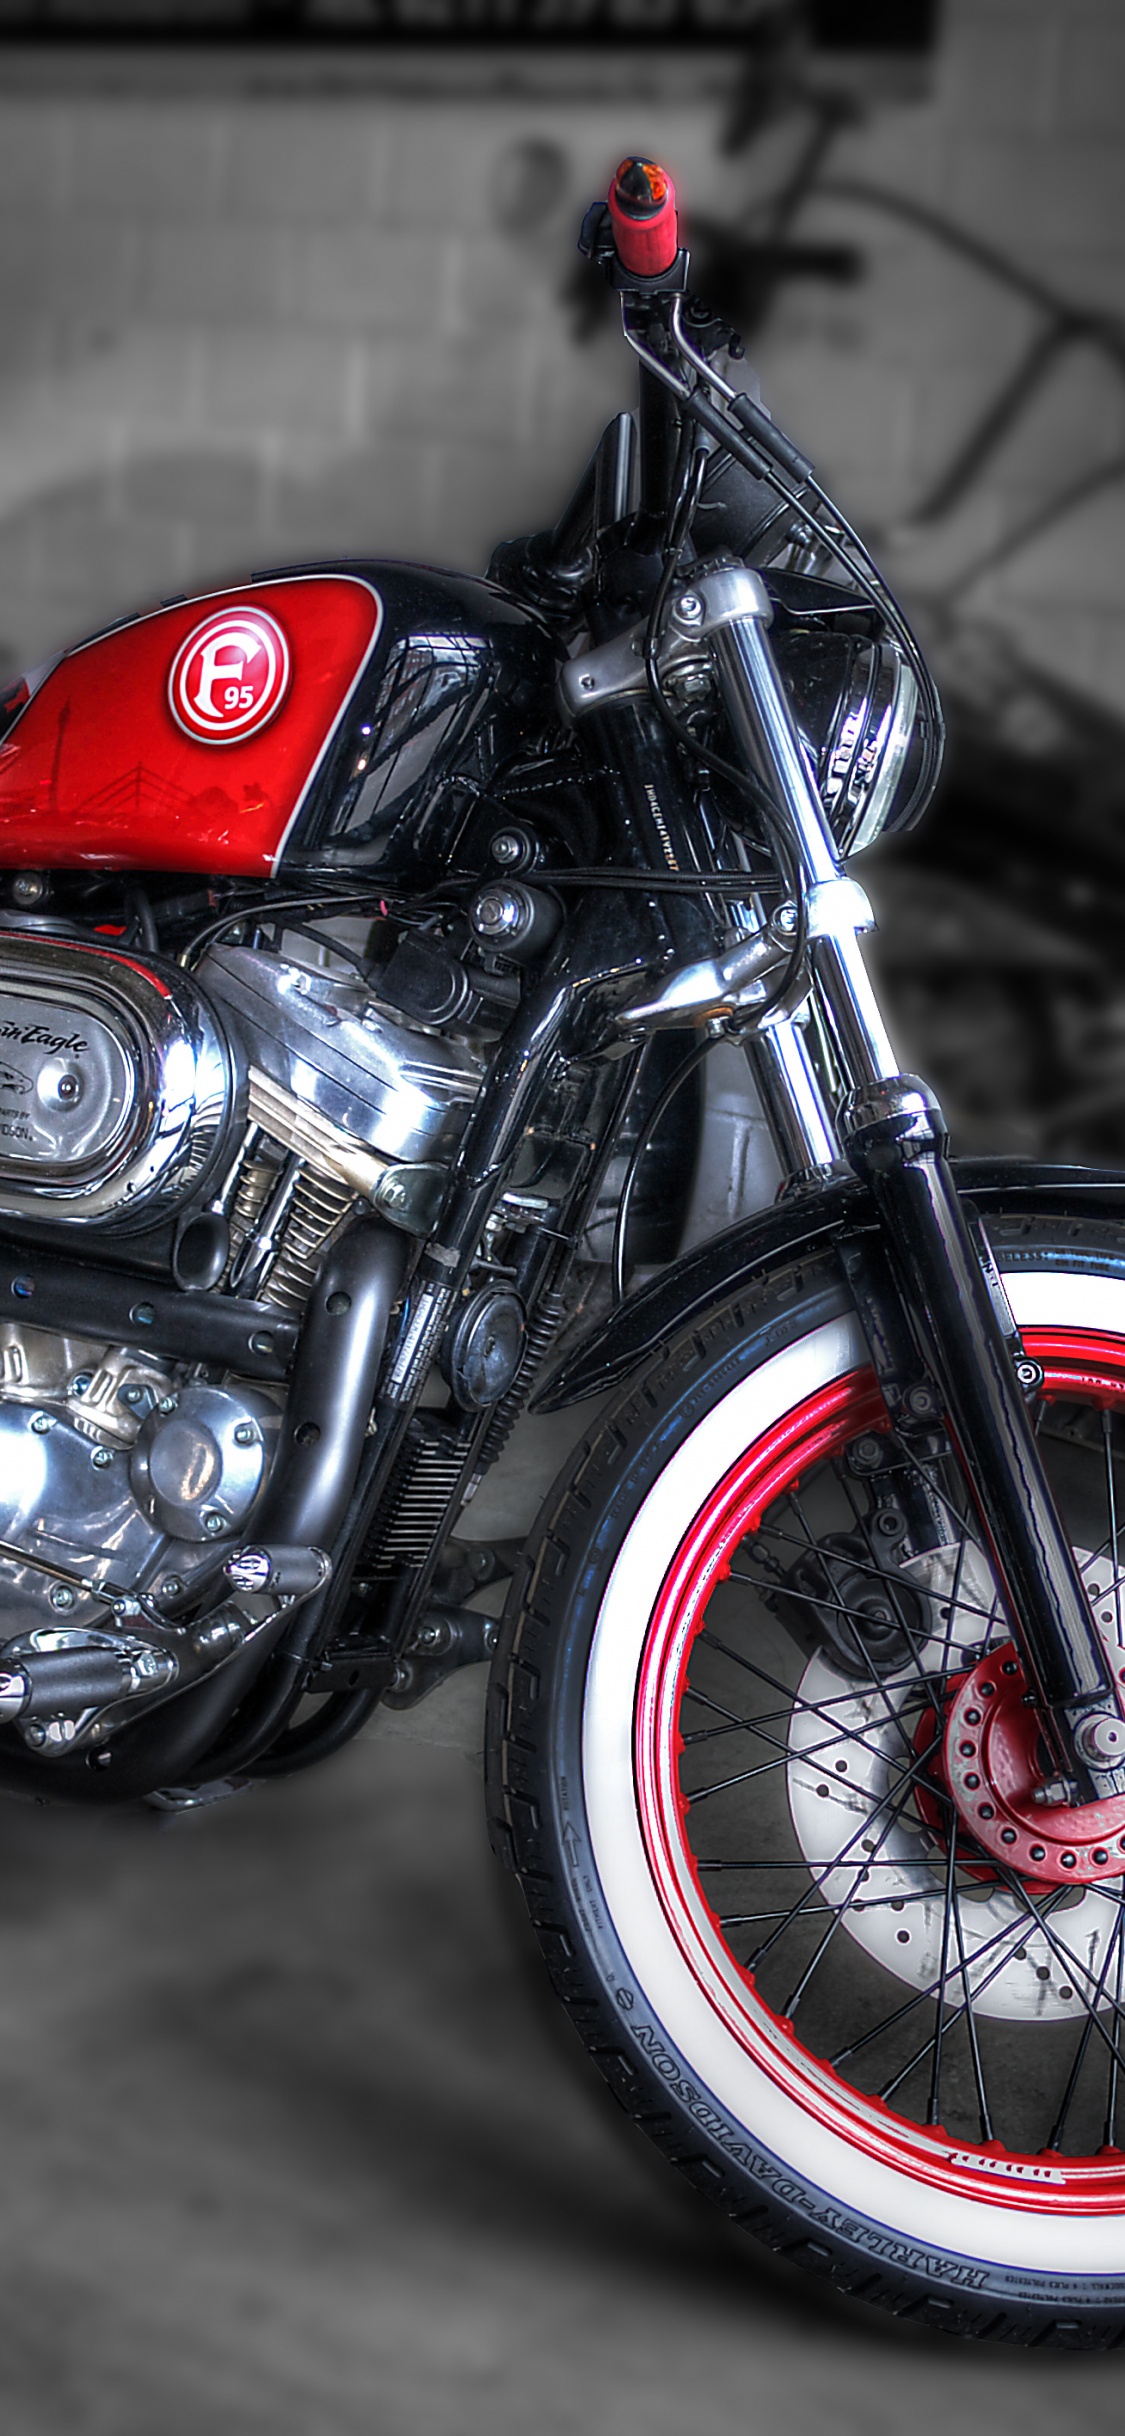 Motocicleta Cruiser Roja y Negra. Wallpaper in 1125x2436 Resolution